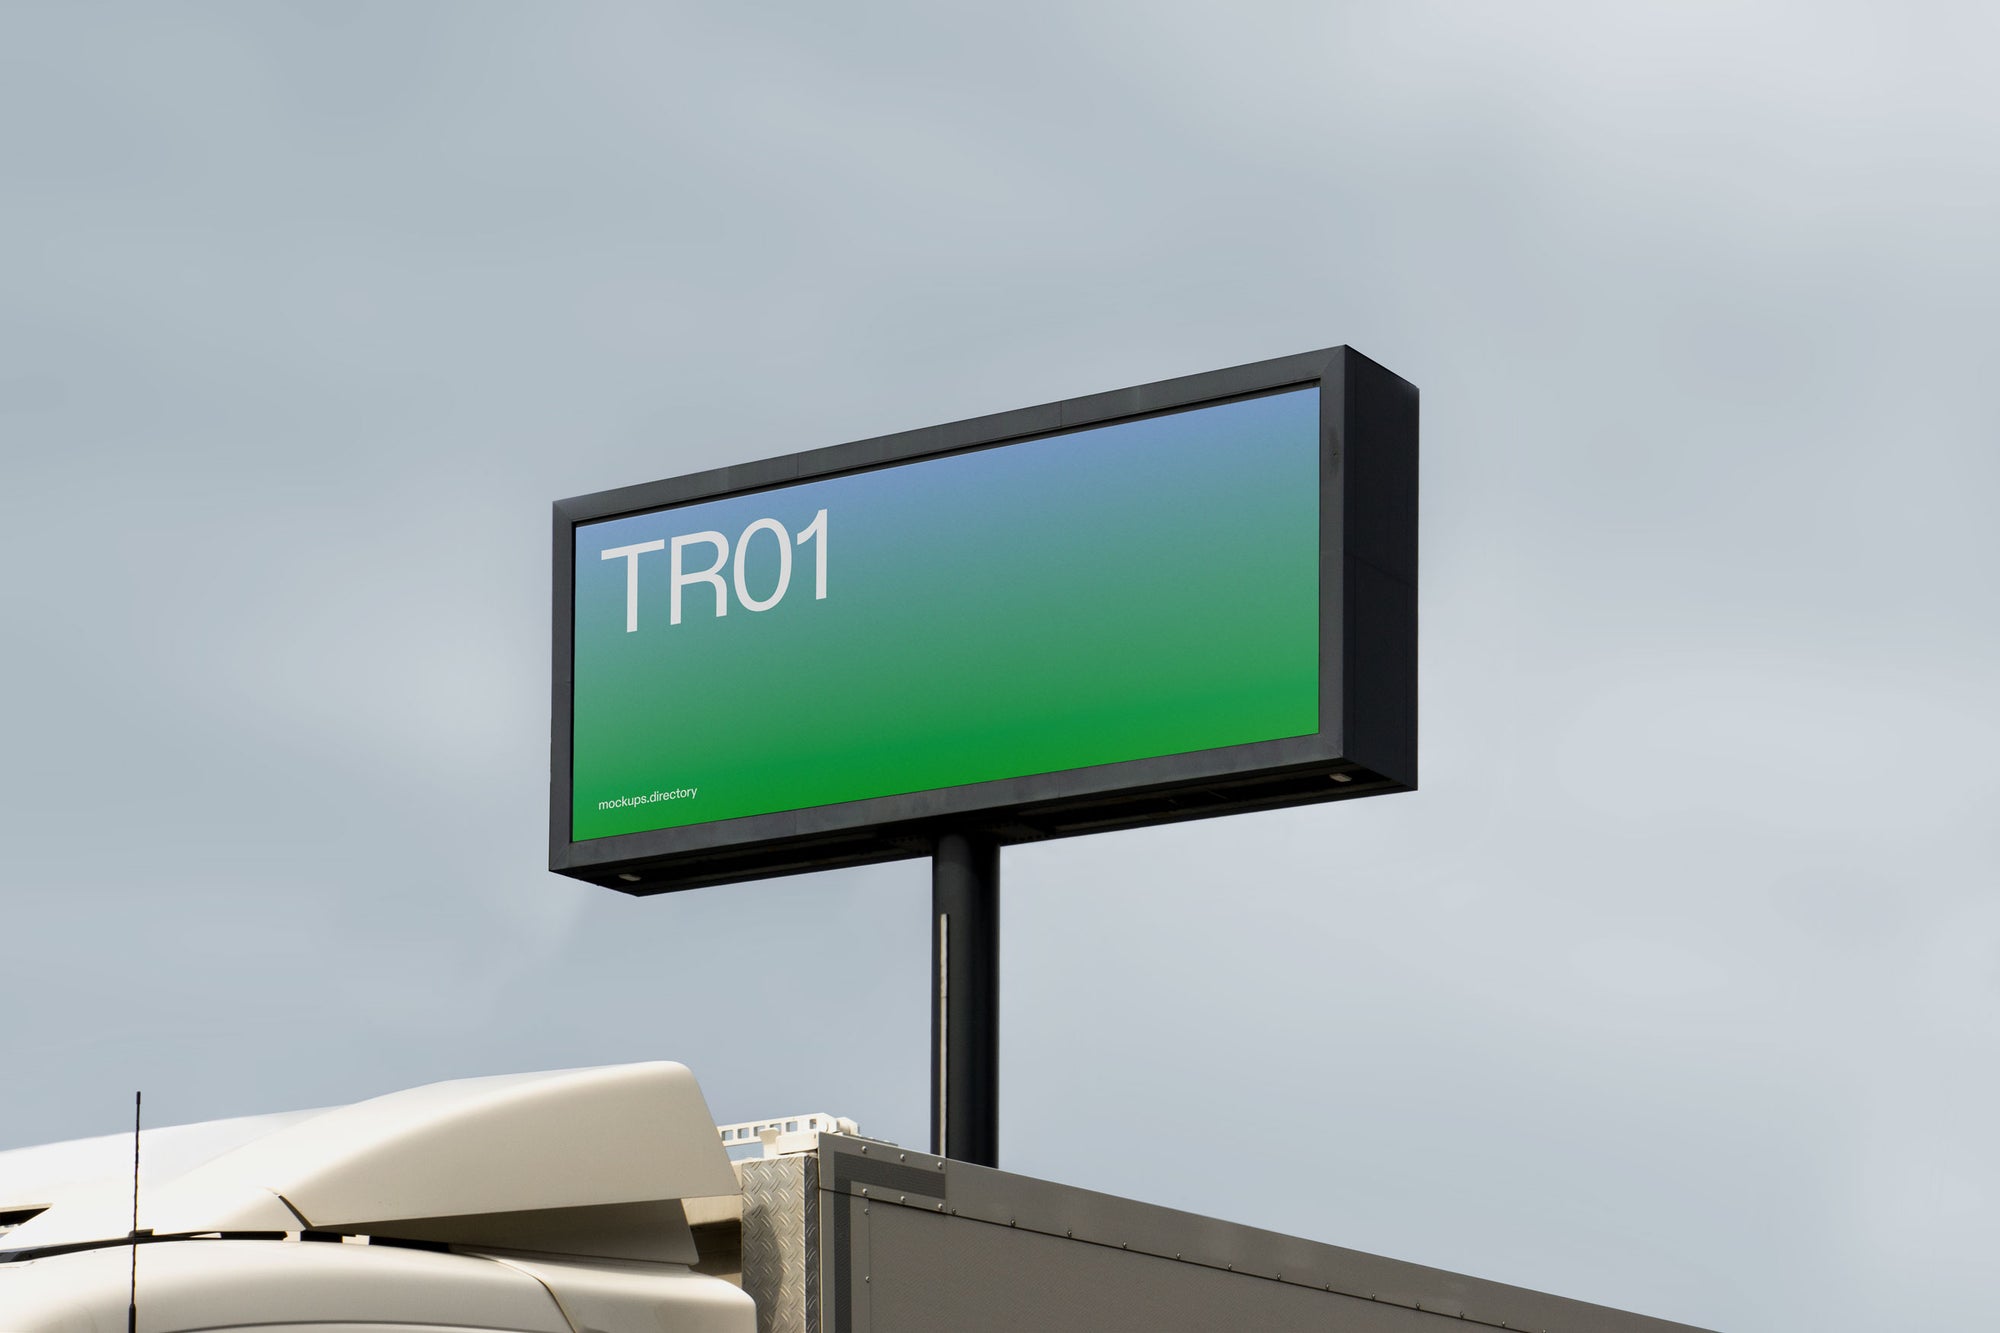 TR01 — Highway Billboard